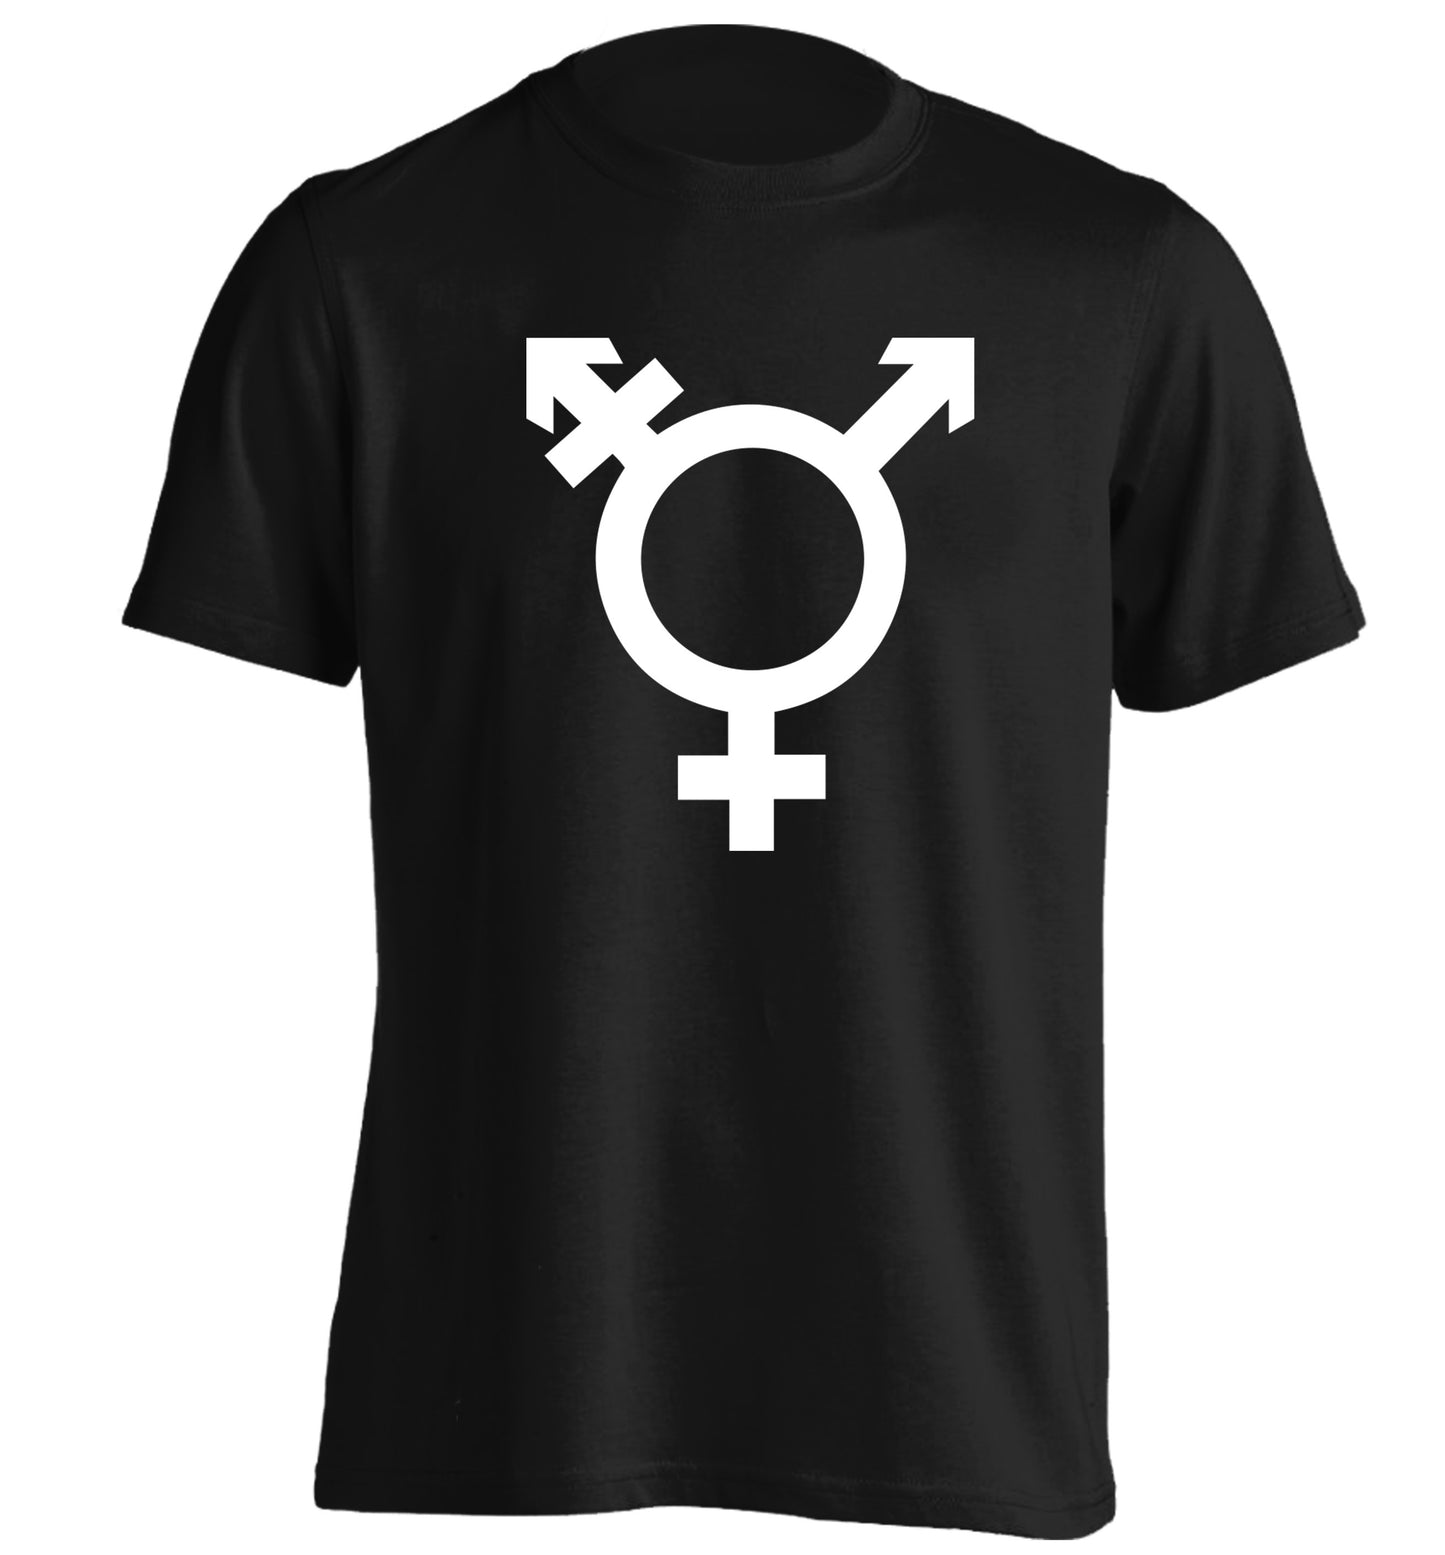 Gender neutral symbol large adults unisex black Tshirt 2XL